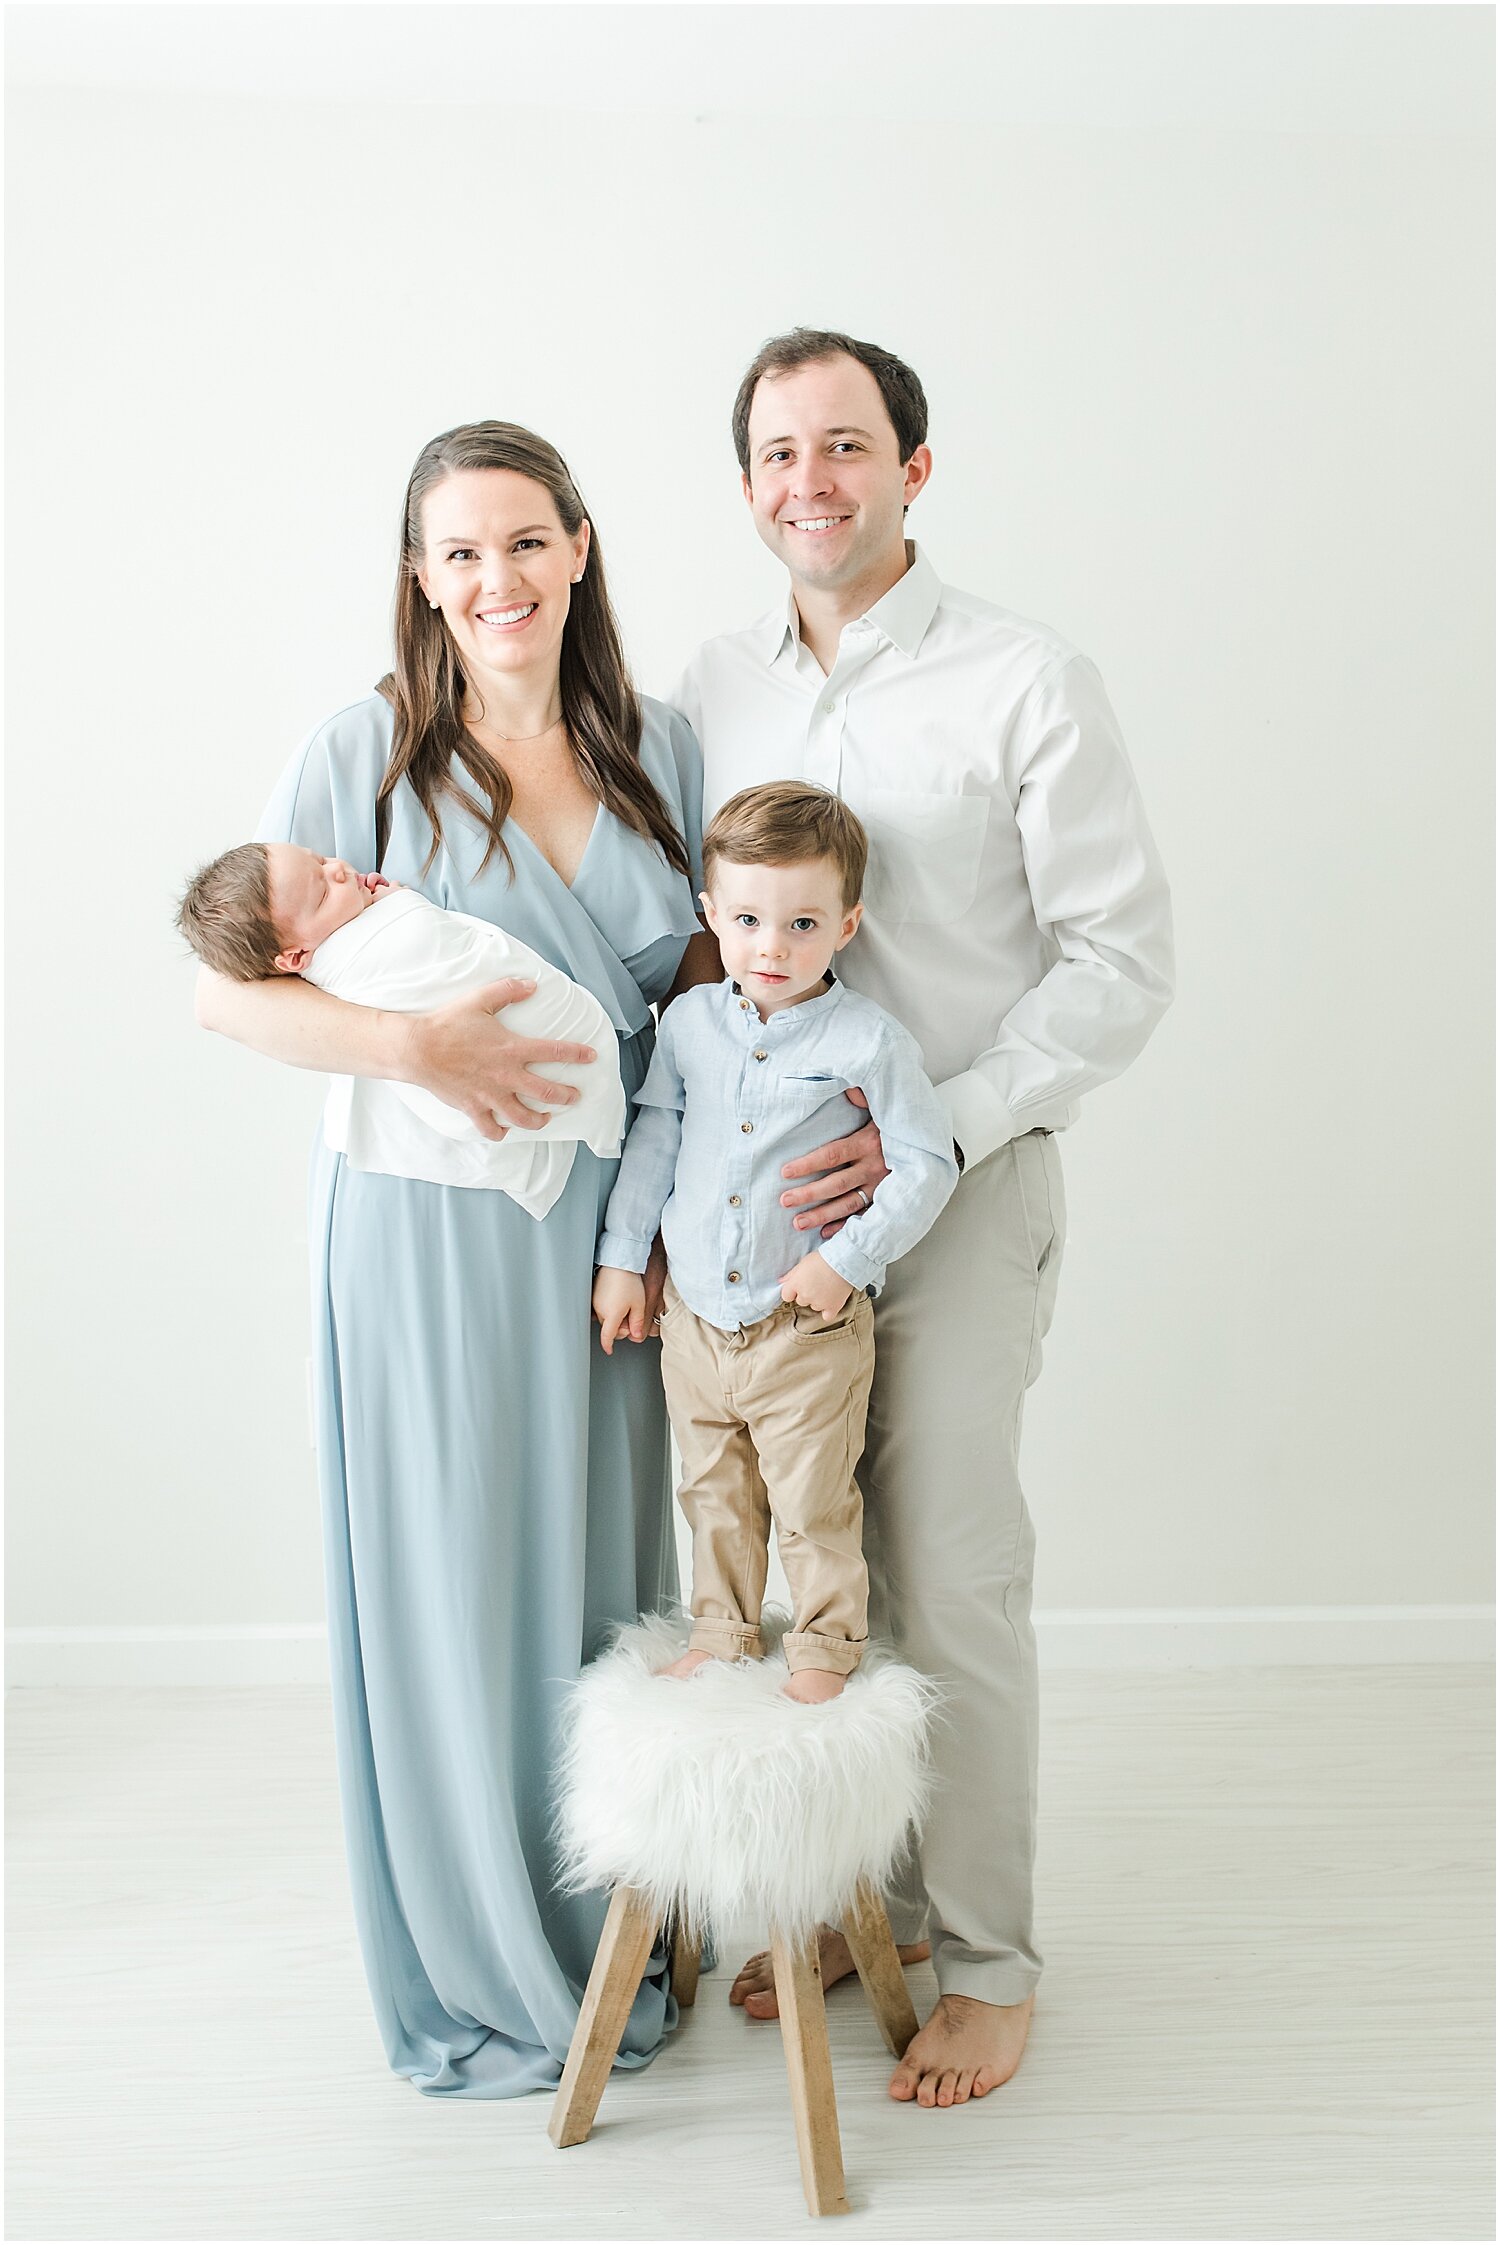 Family newborn photos in Darien, CT Newborn Studio. Photos by Kristin Wood Photography.